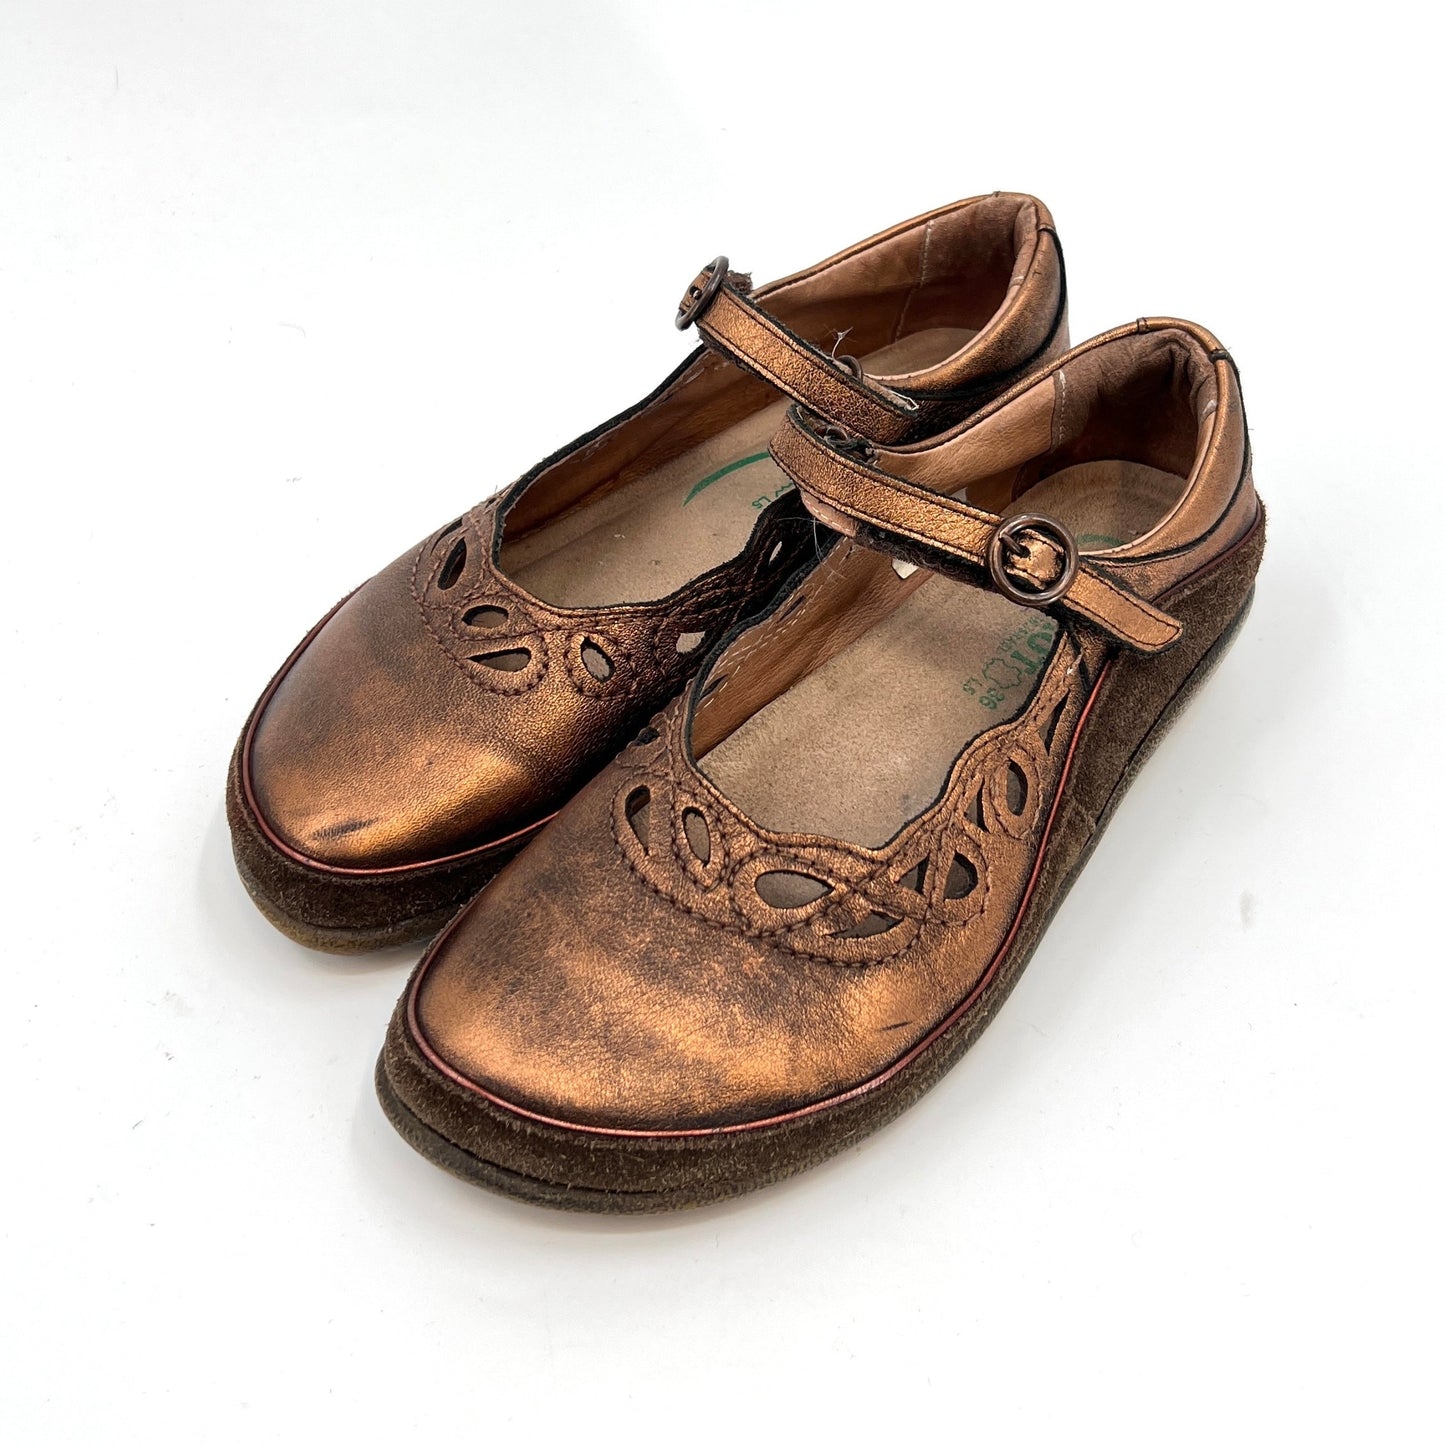 Naot Bronze Leather Mary Janes Shoes 36EU